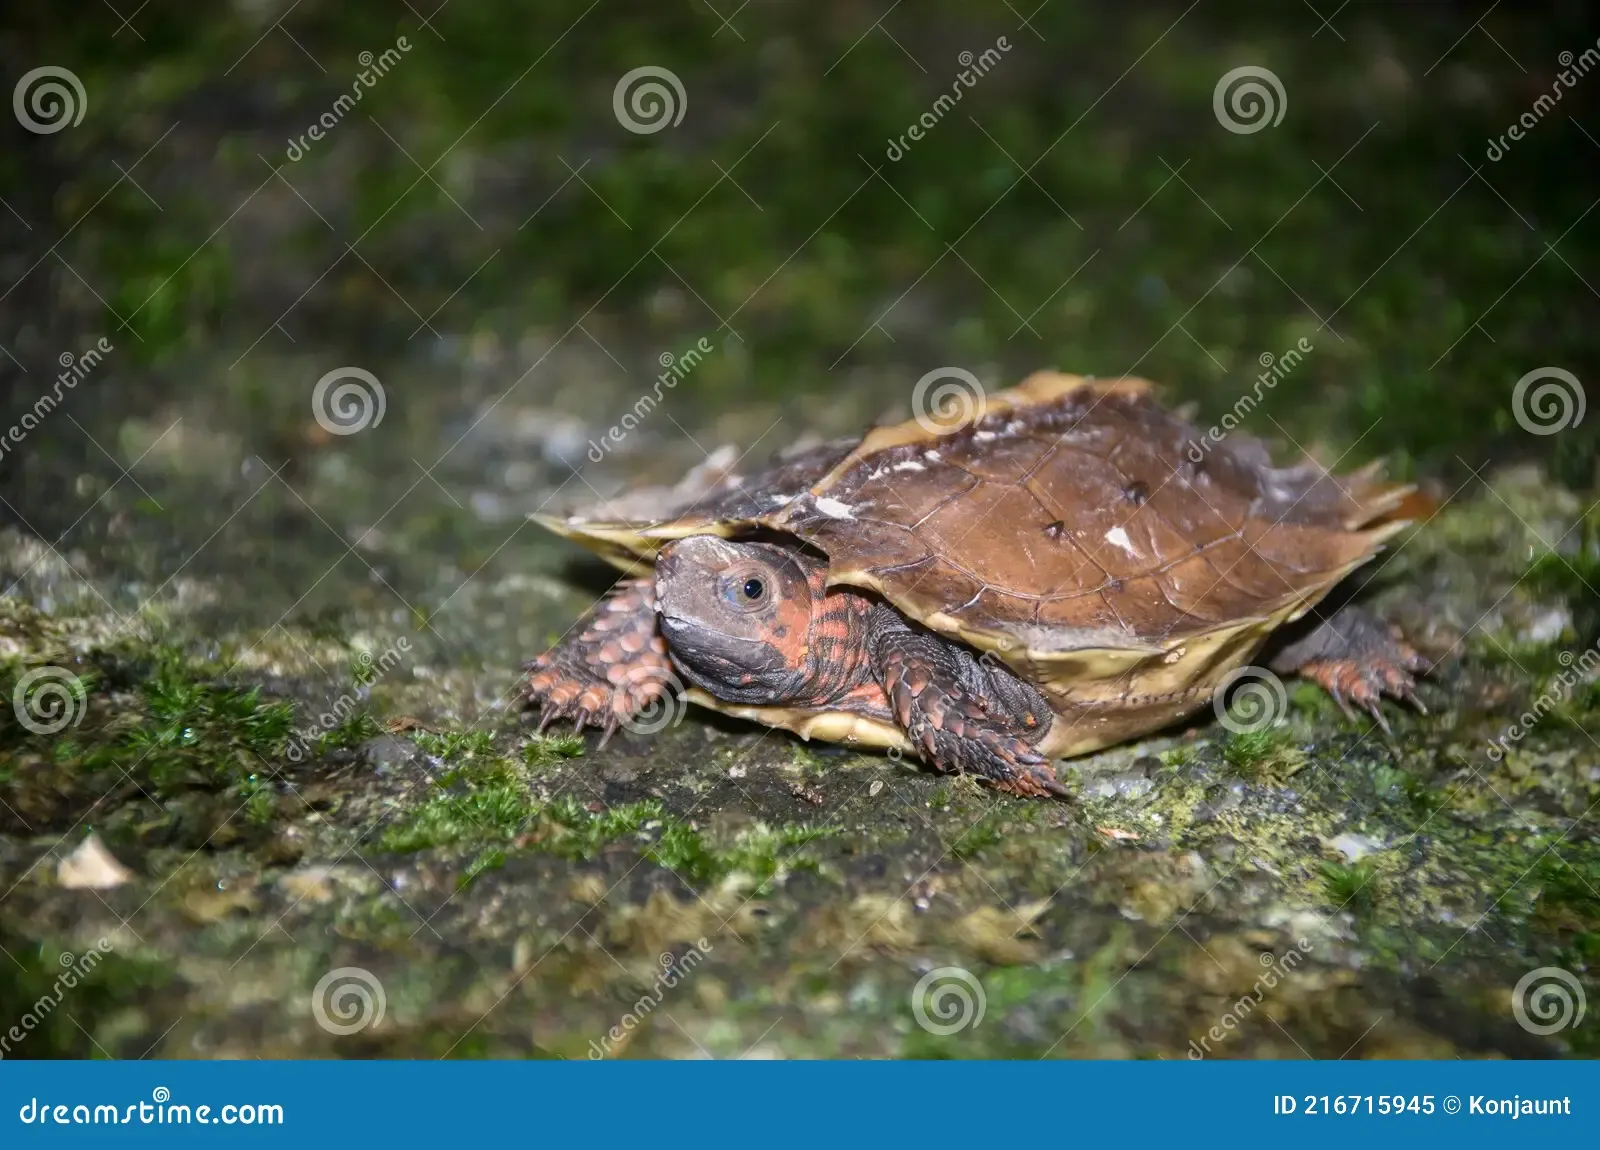 spiny-turtle-heosemys-spinosa-rock-green-moss-terrapin-cogwheel-wildness-forrest-rain-thailand-216715945.jpg